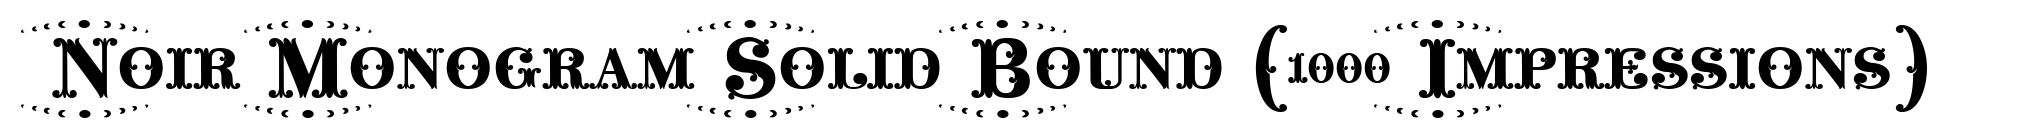 Noir Monogram Solid Bound (1000 Impressions) image